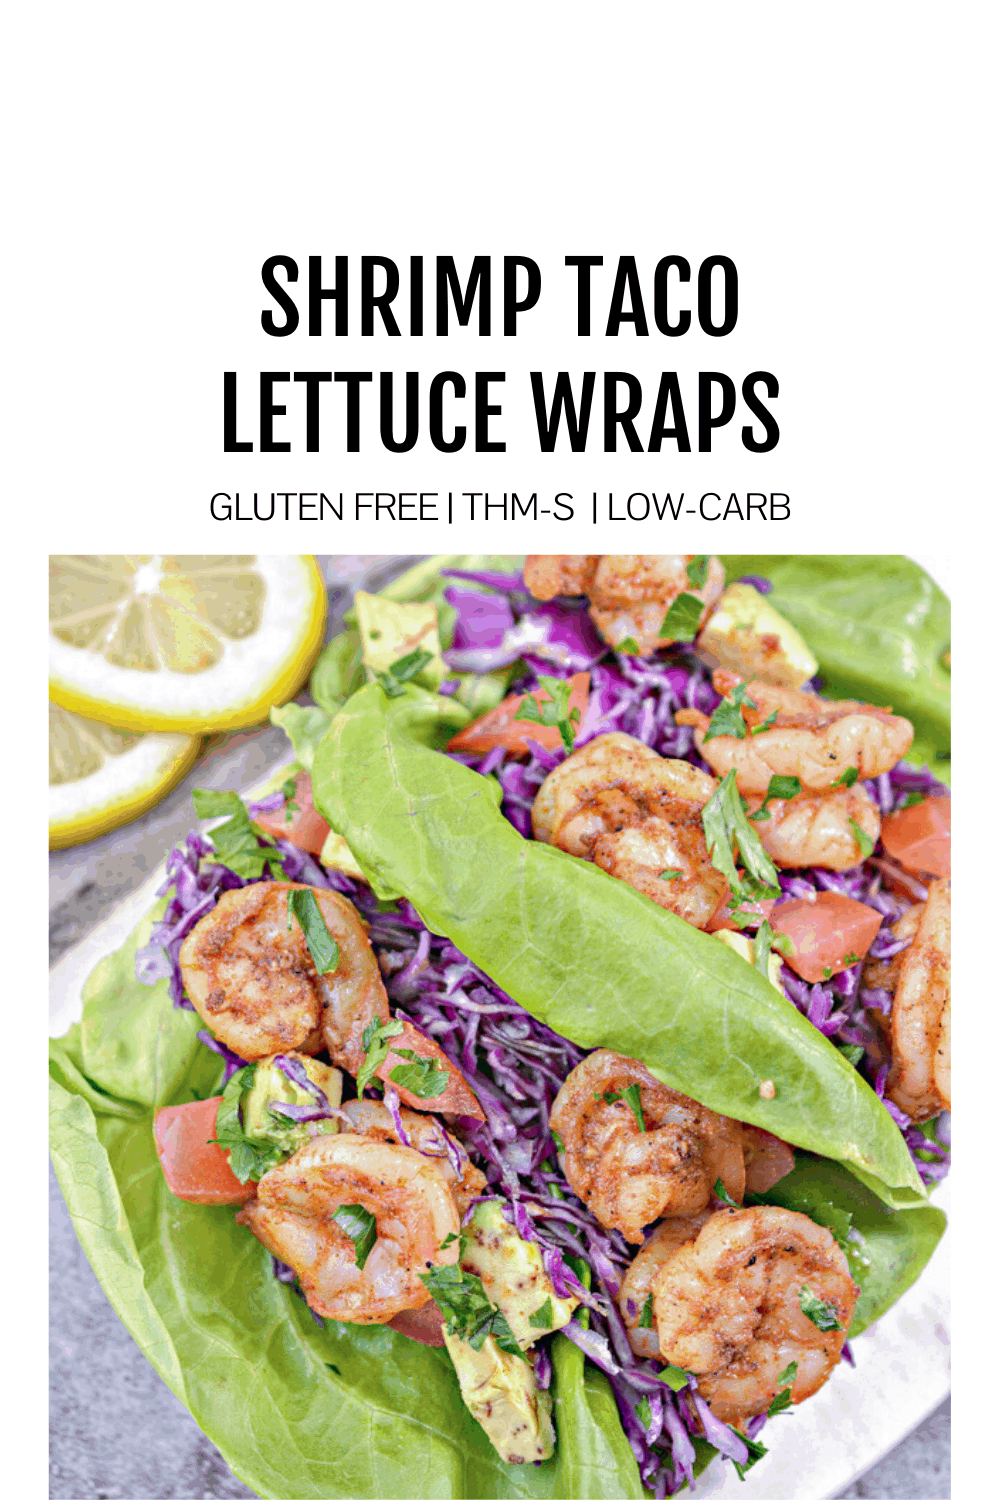 Featured Image for keto shrimp taco lettuce wraps